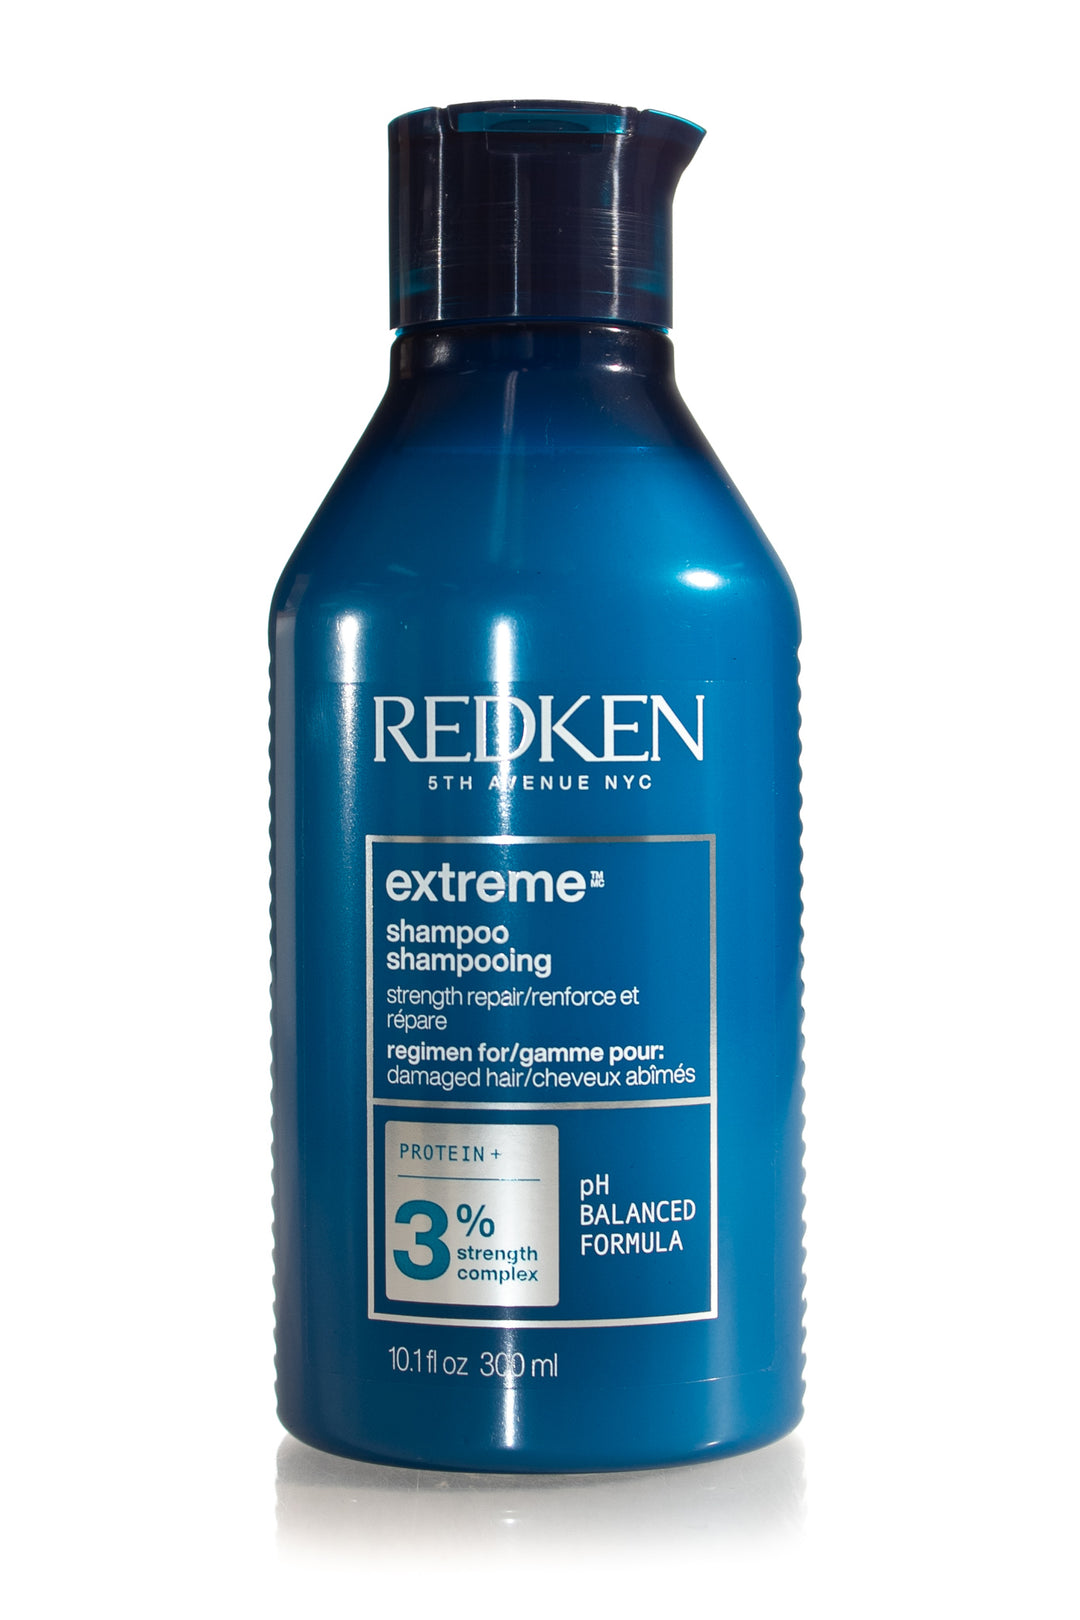 redken-extreme-shampoo-300ml